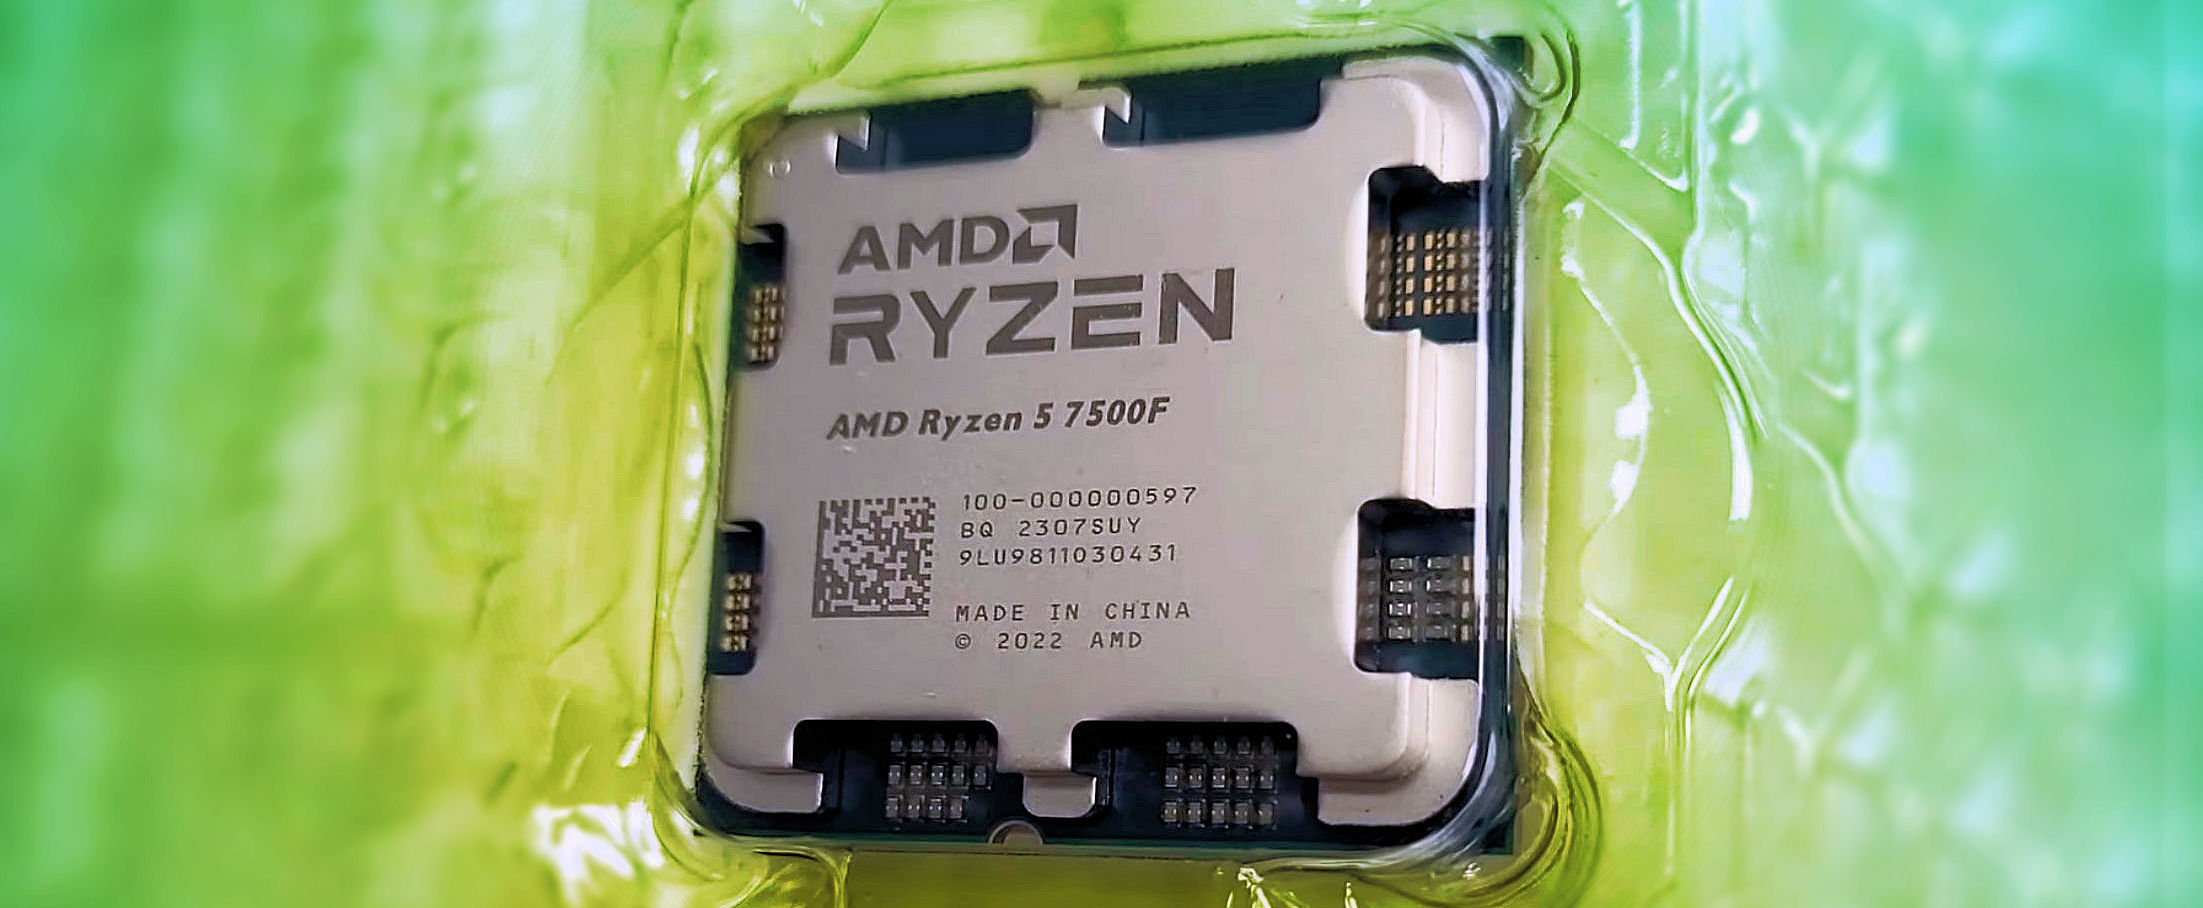 AMD announces a new budget sub-$200 mainstream AM4 CPU for PC Gaming, the Ryzen  7 5700